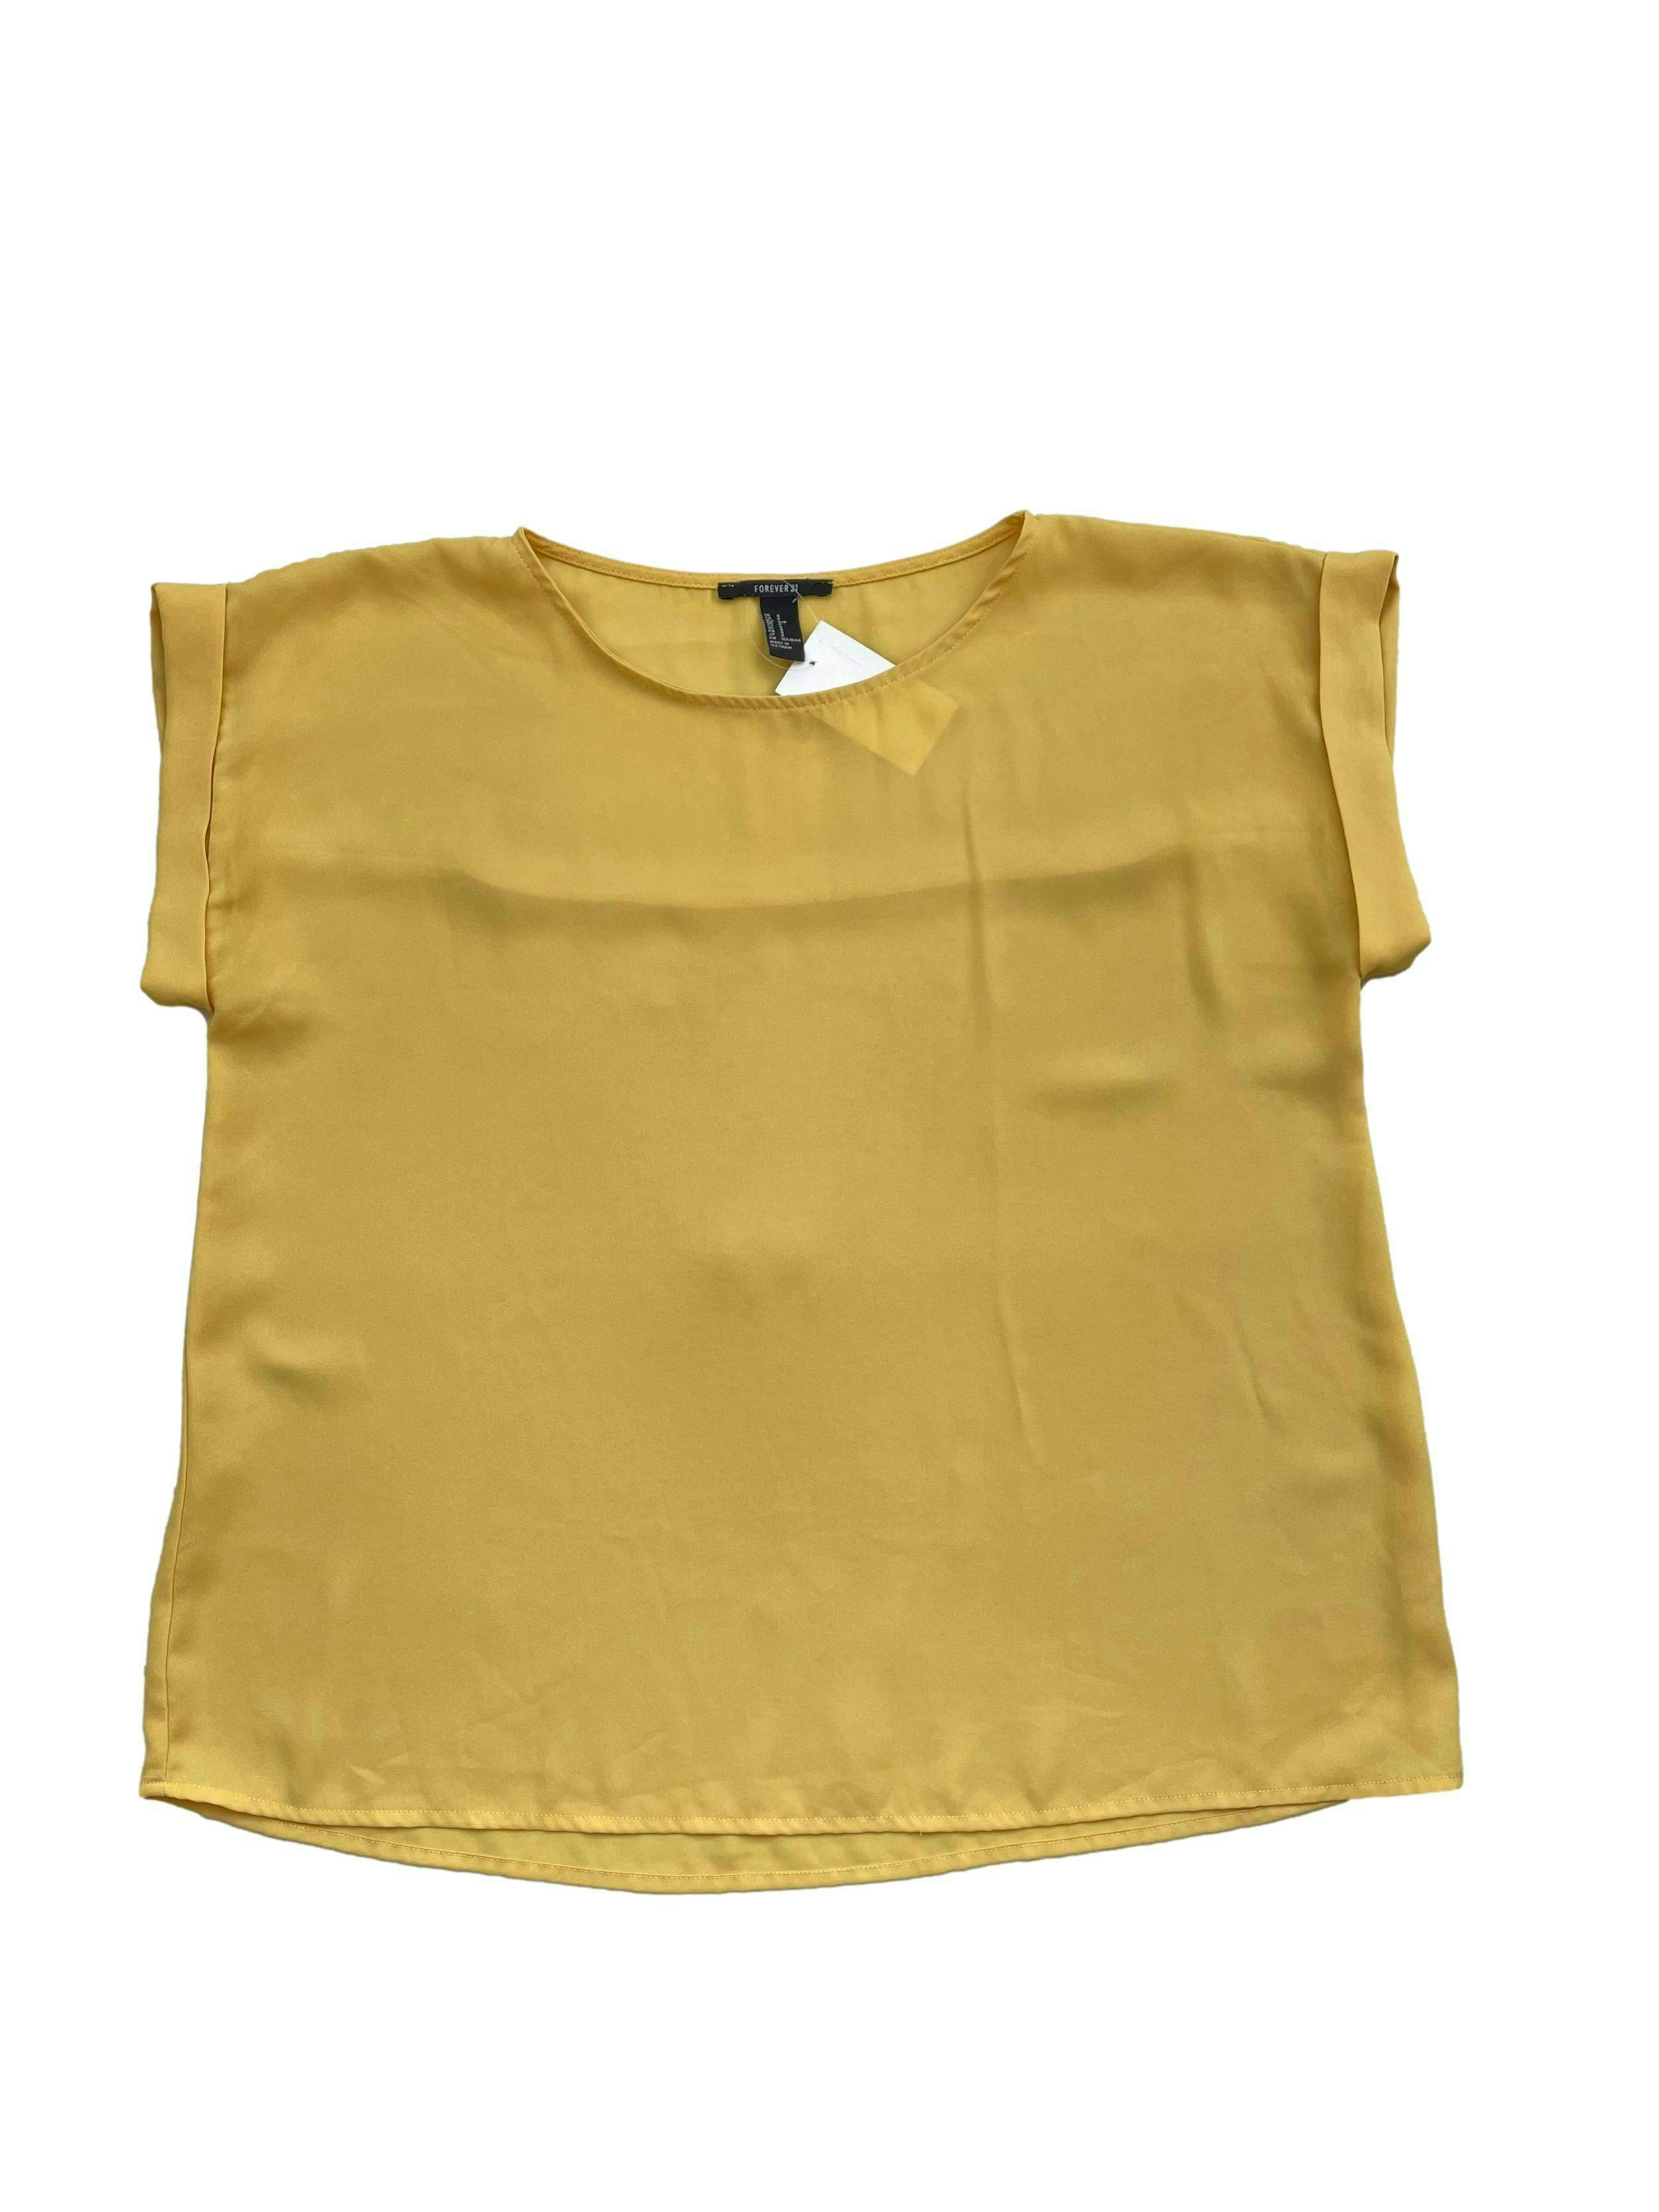 Blusa oversized Forever 21 , amarilla de gasa con transparencia media , mangas cortas. Busto 106 cm , Largo 60 cm.